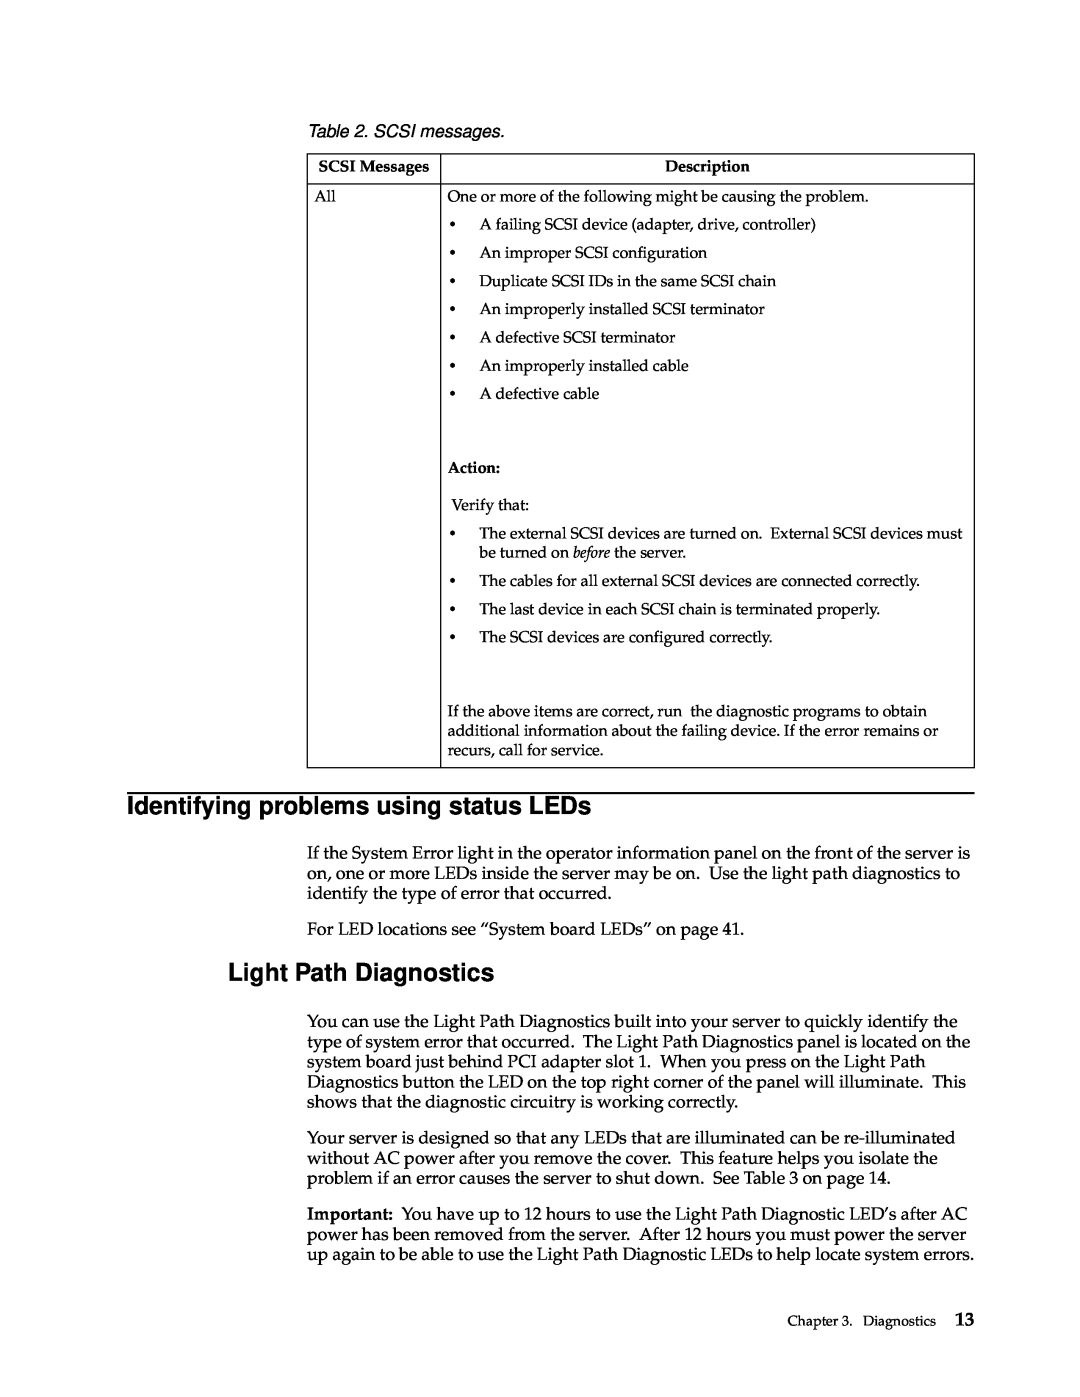 IBM xSeries 330 manual Identifying problems using status LEDs, Light Path Diagnostics 